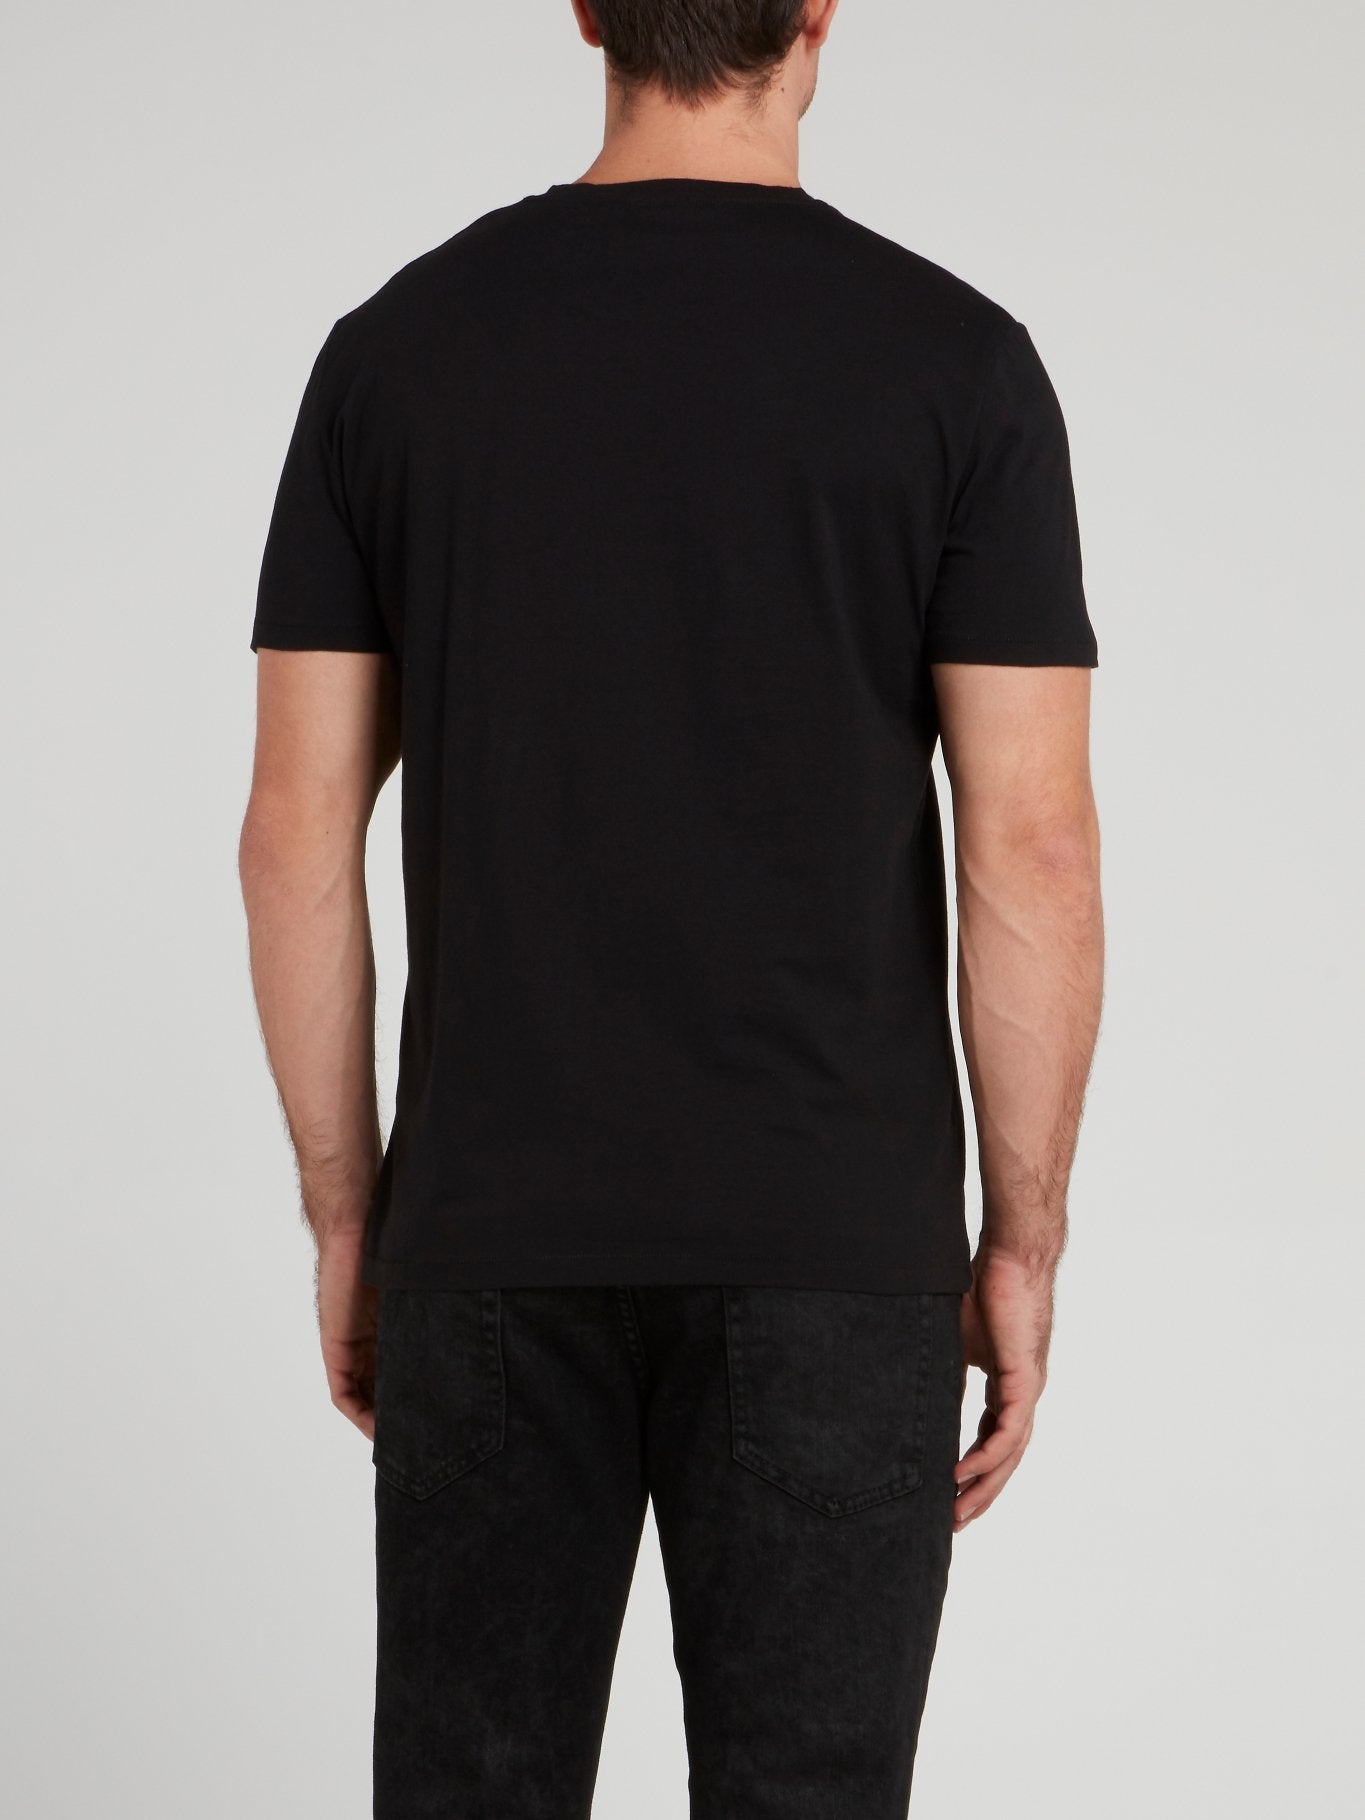 Black Graphic Print Crewneck T-Shirt